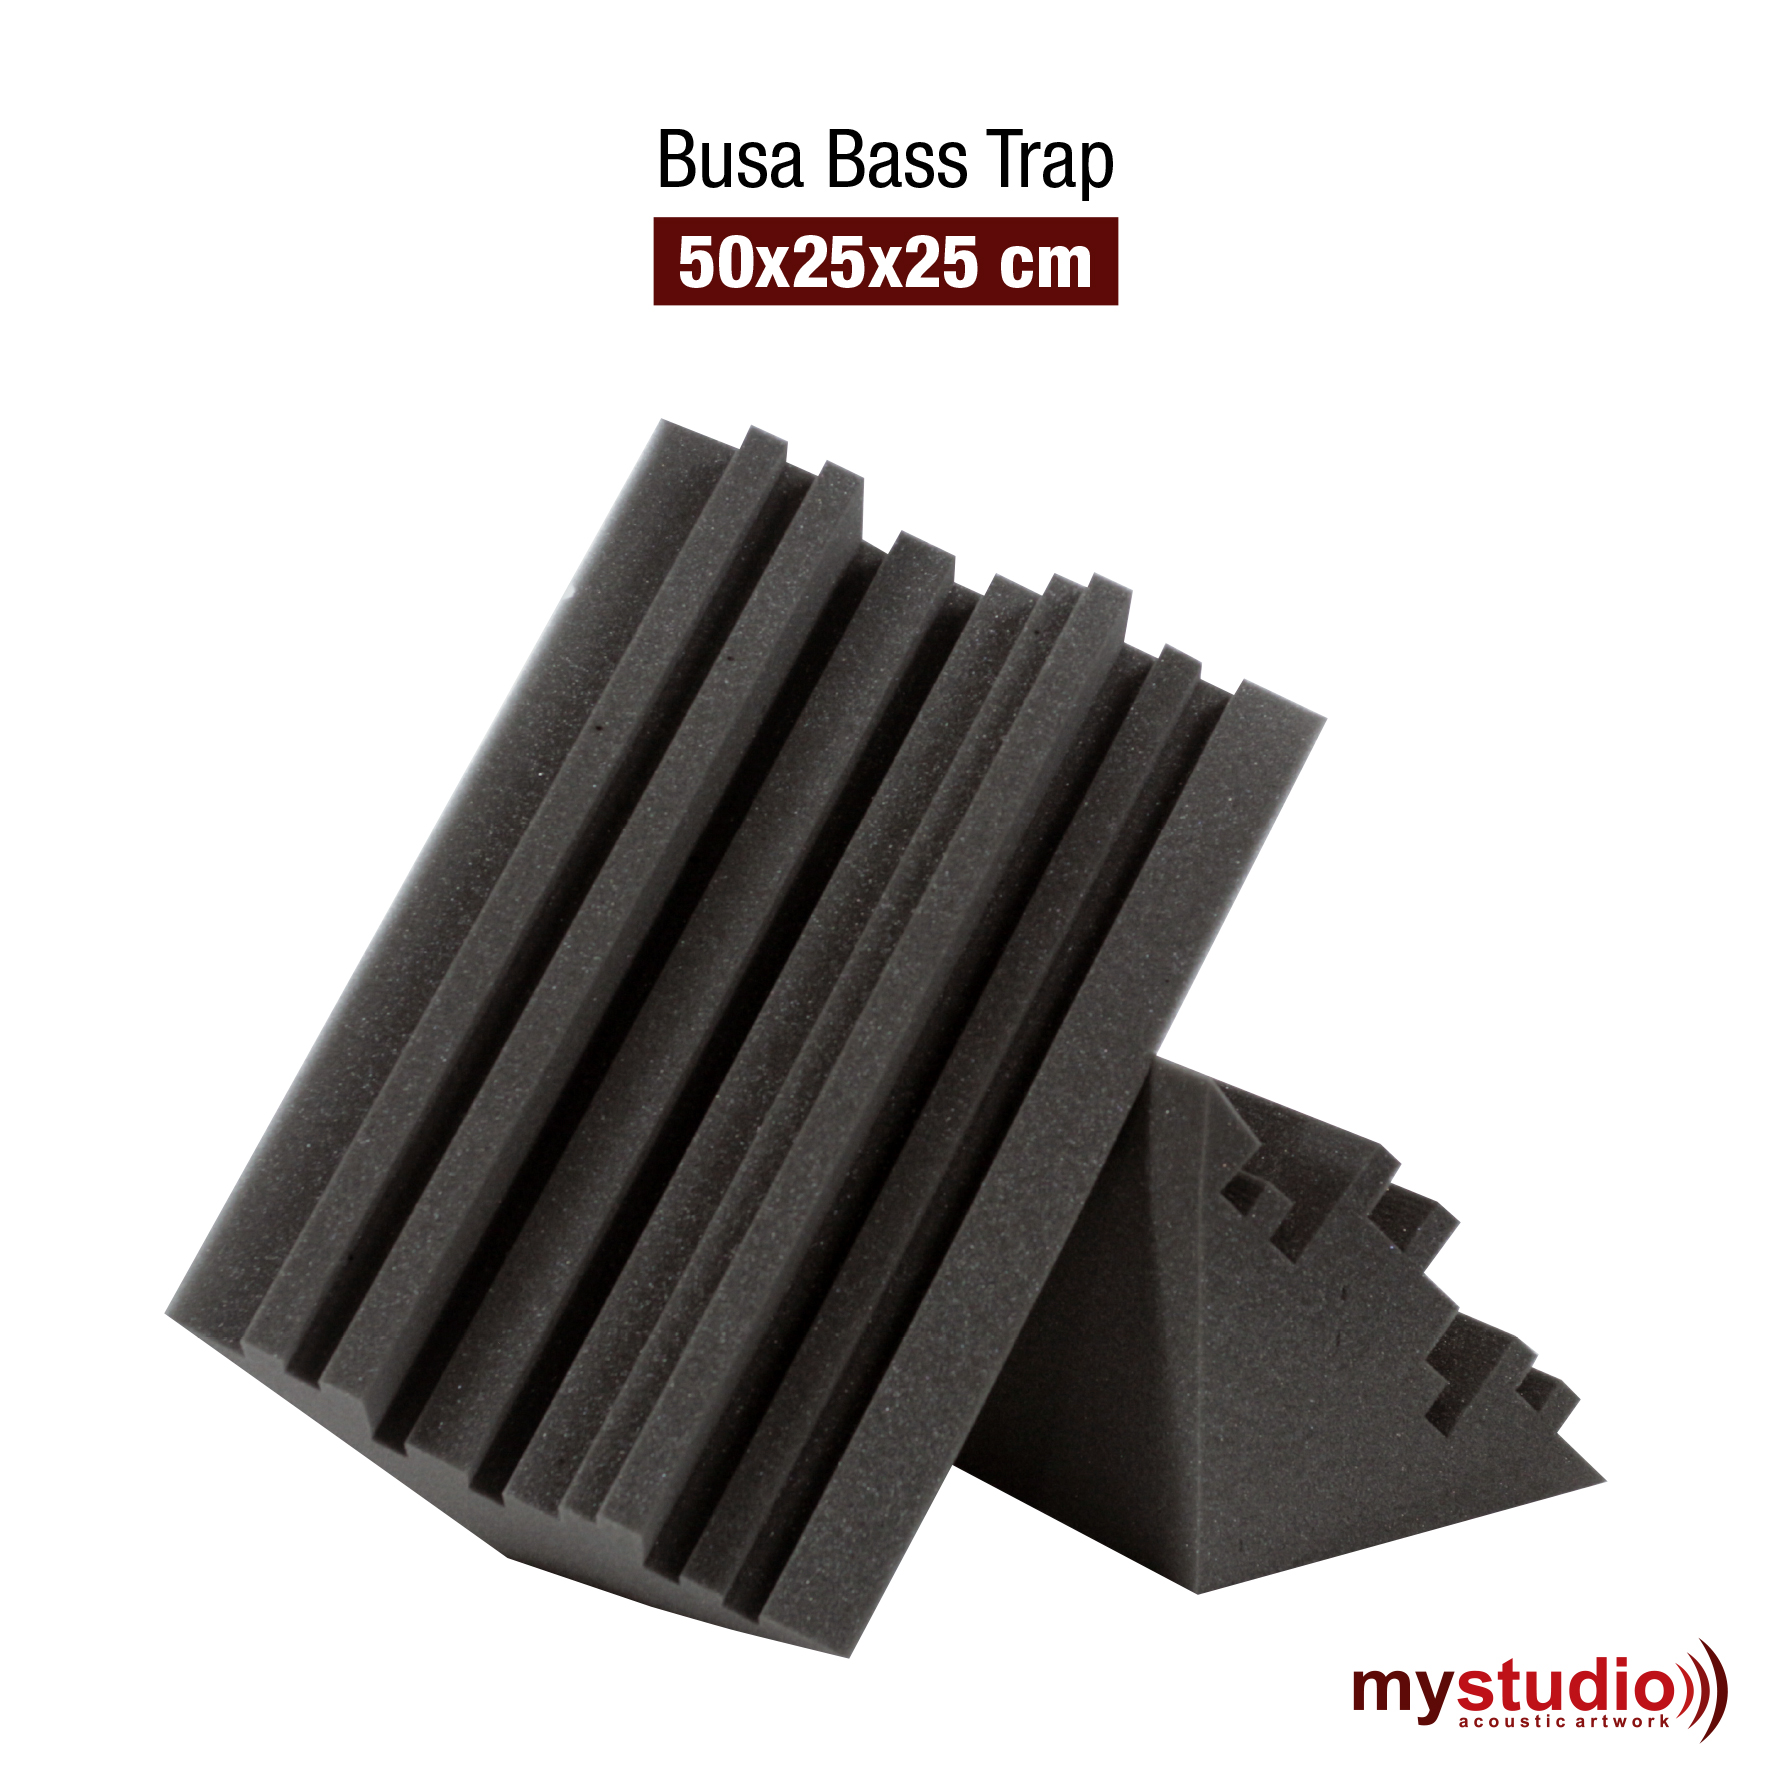 Busa Bass Trap - Partner Mystudio